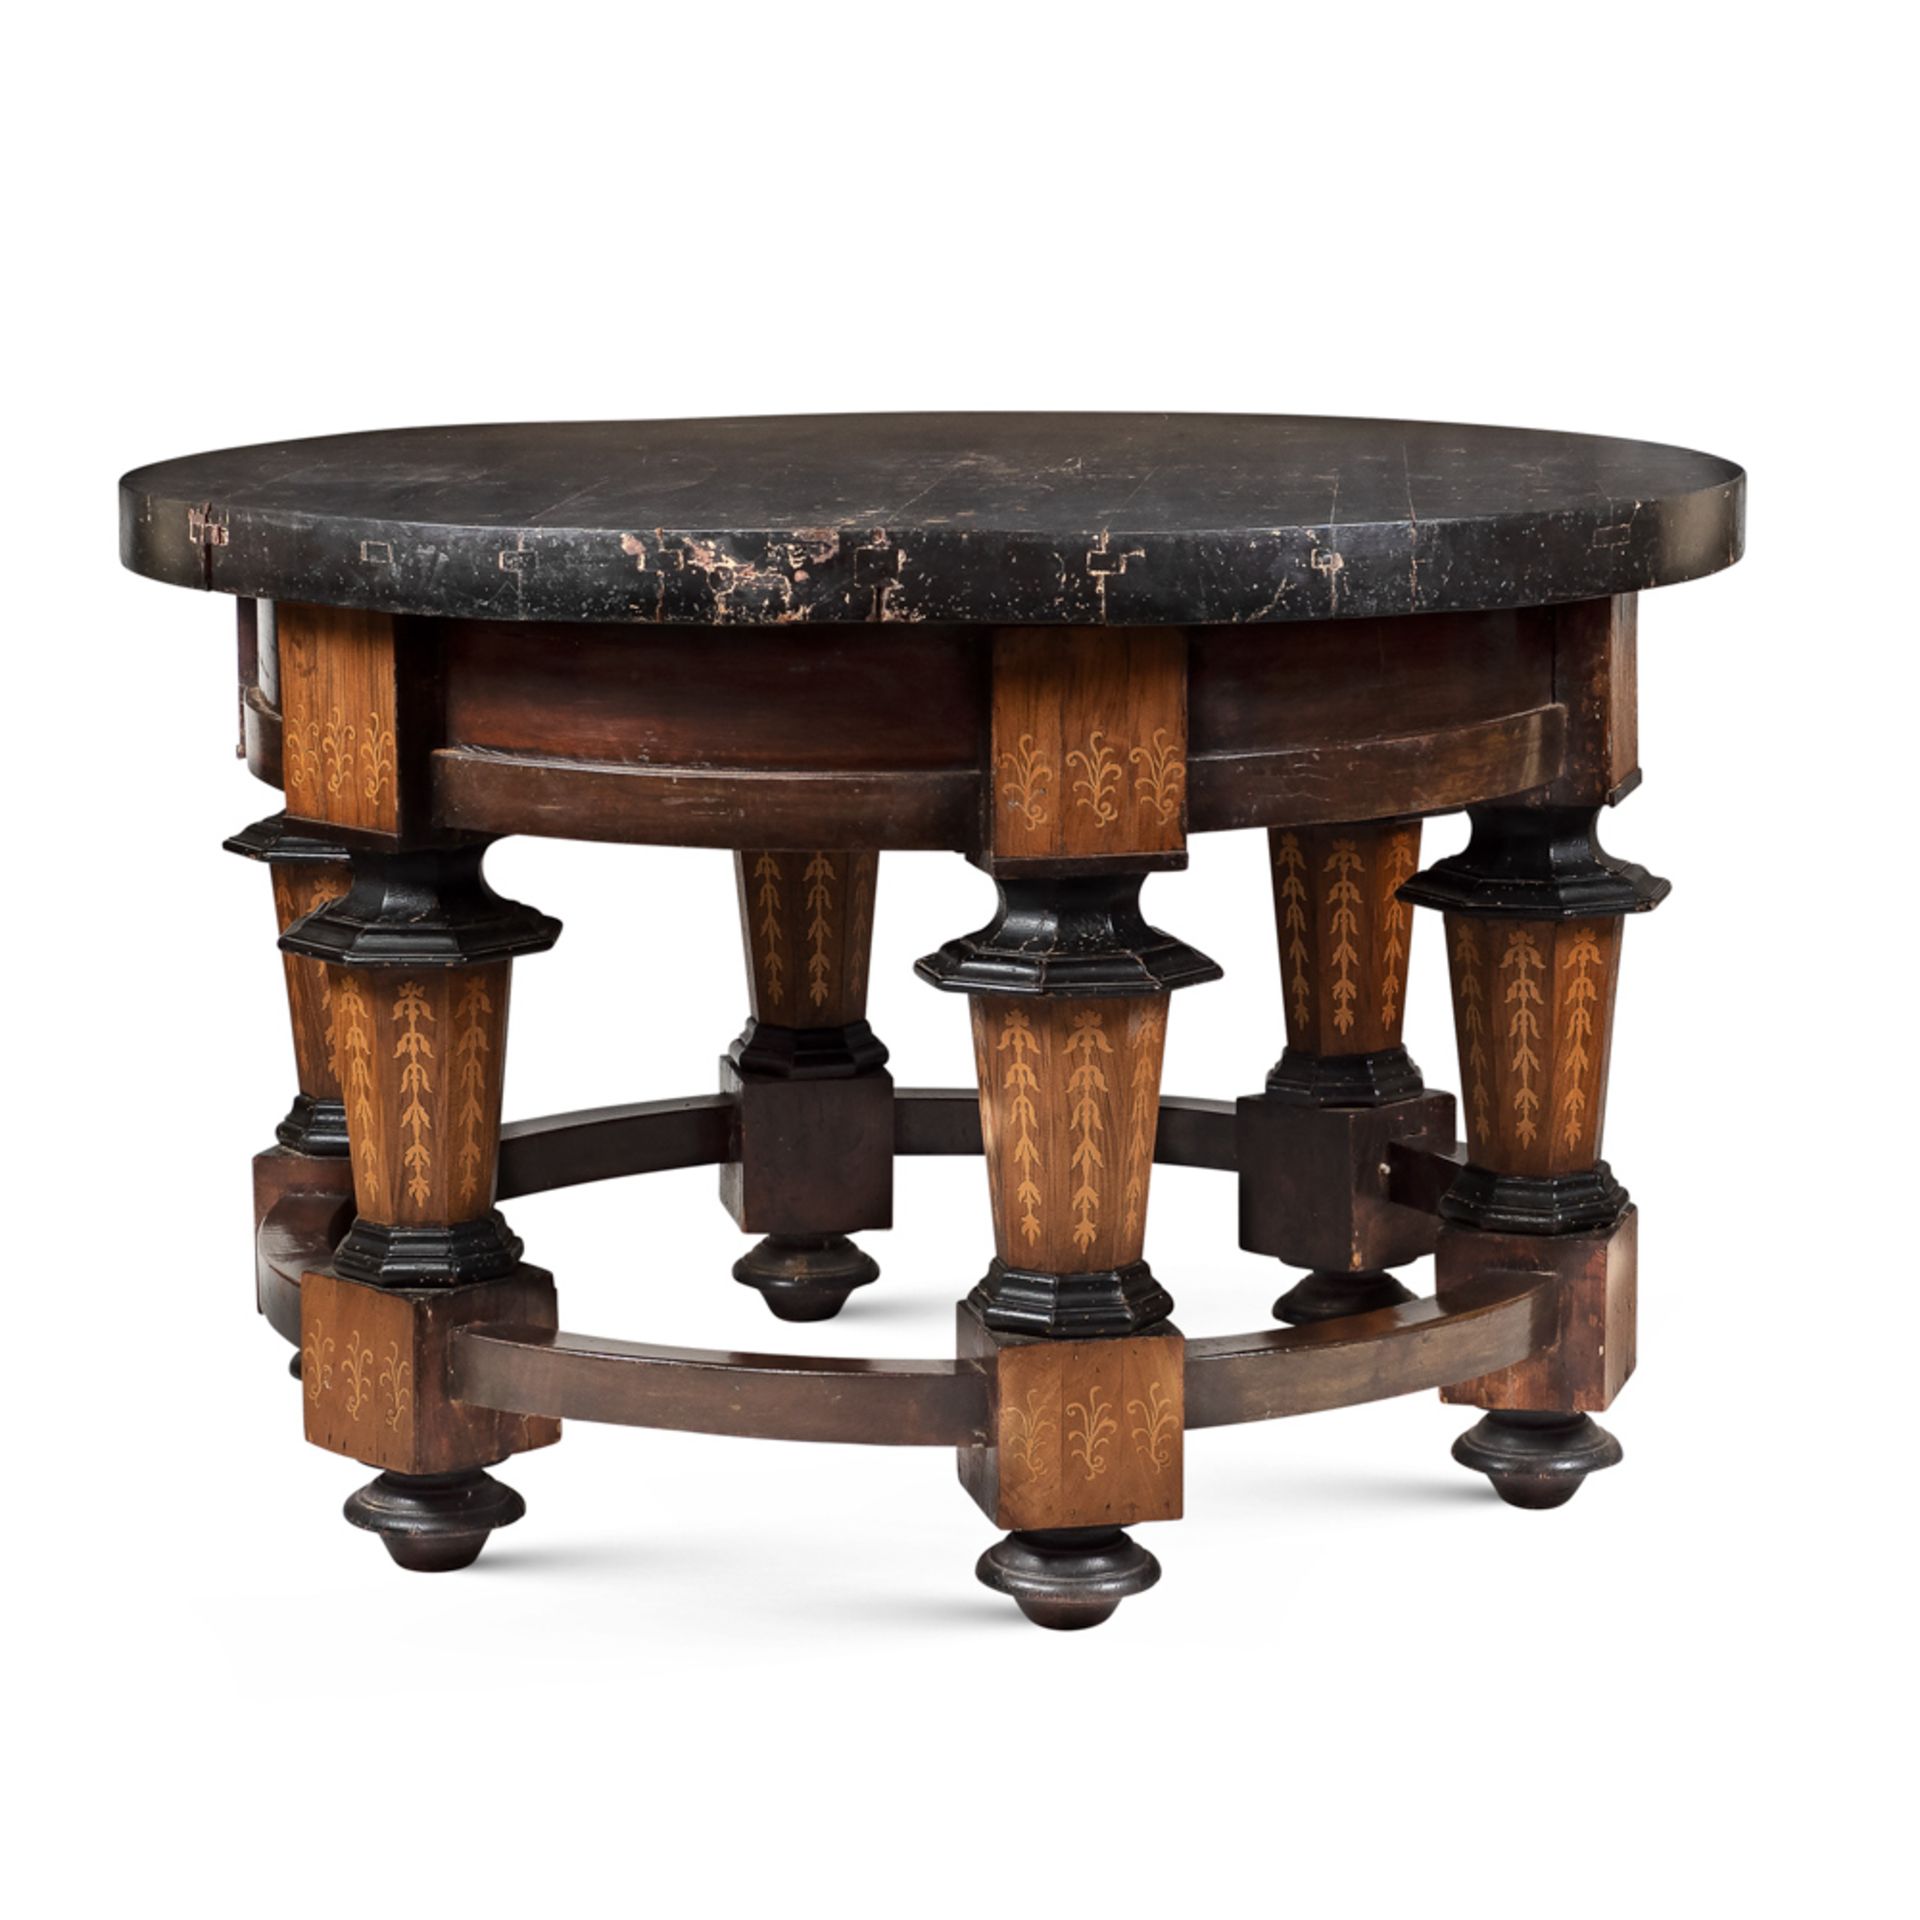 Centre table Italy, 18th-19th century 87x138 cm.